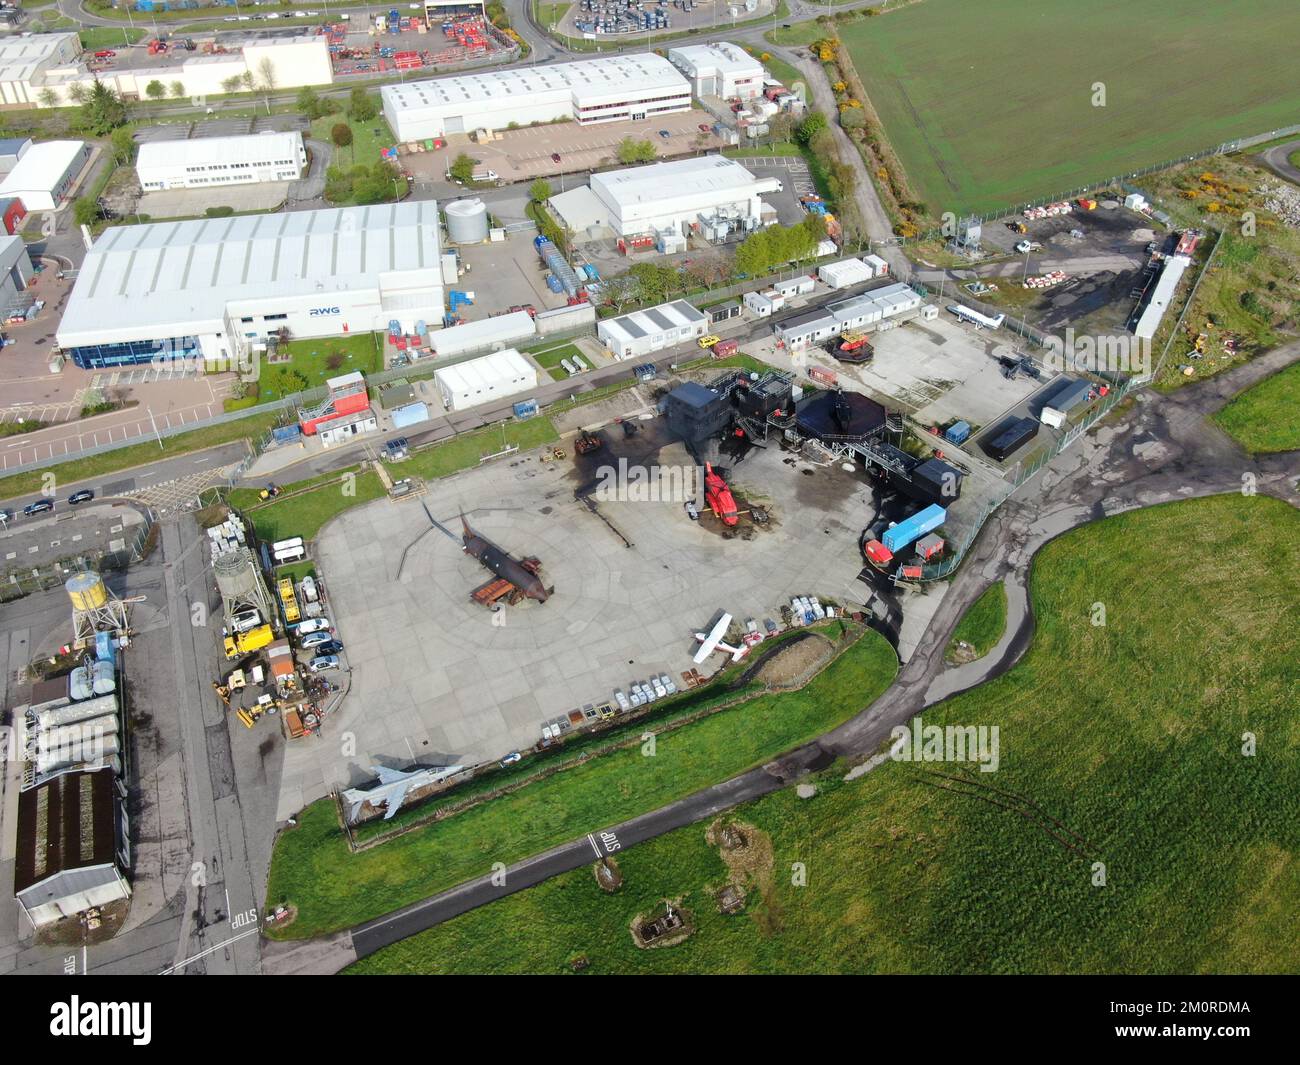 Aberdeen International Airport Fire Ground Stock Photo